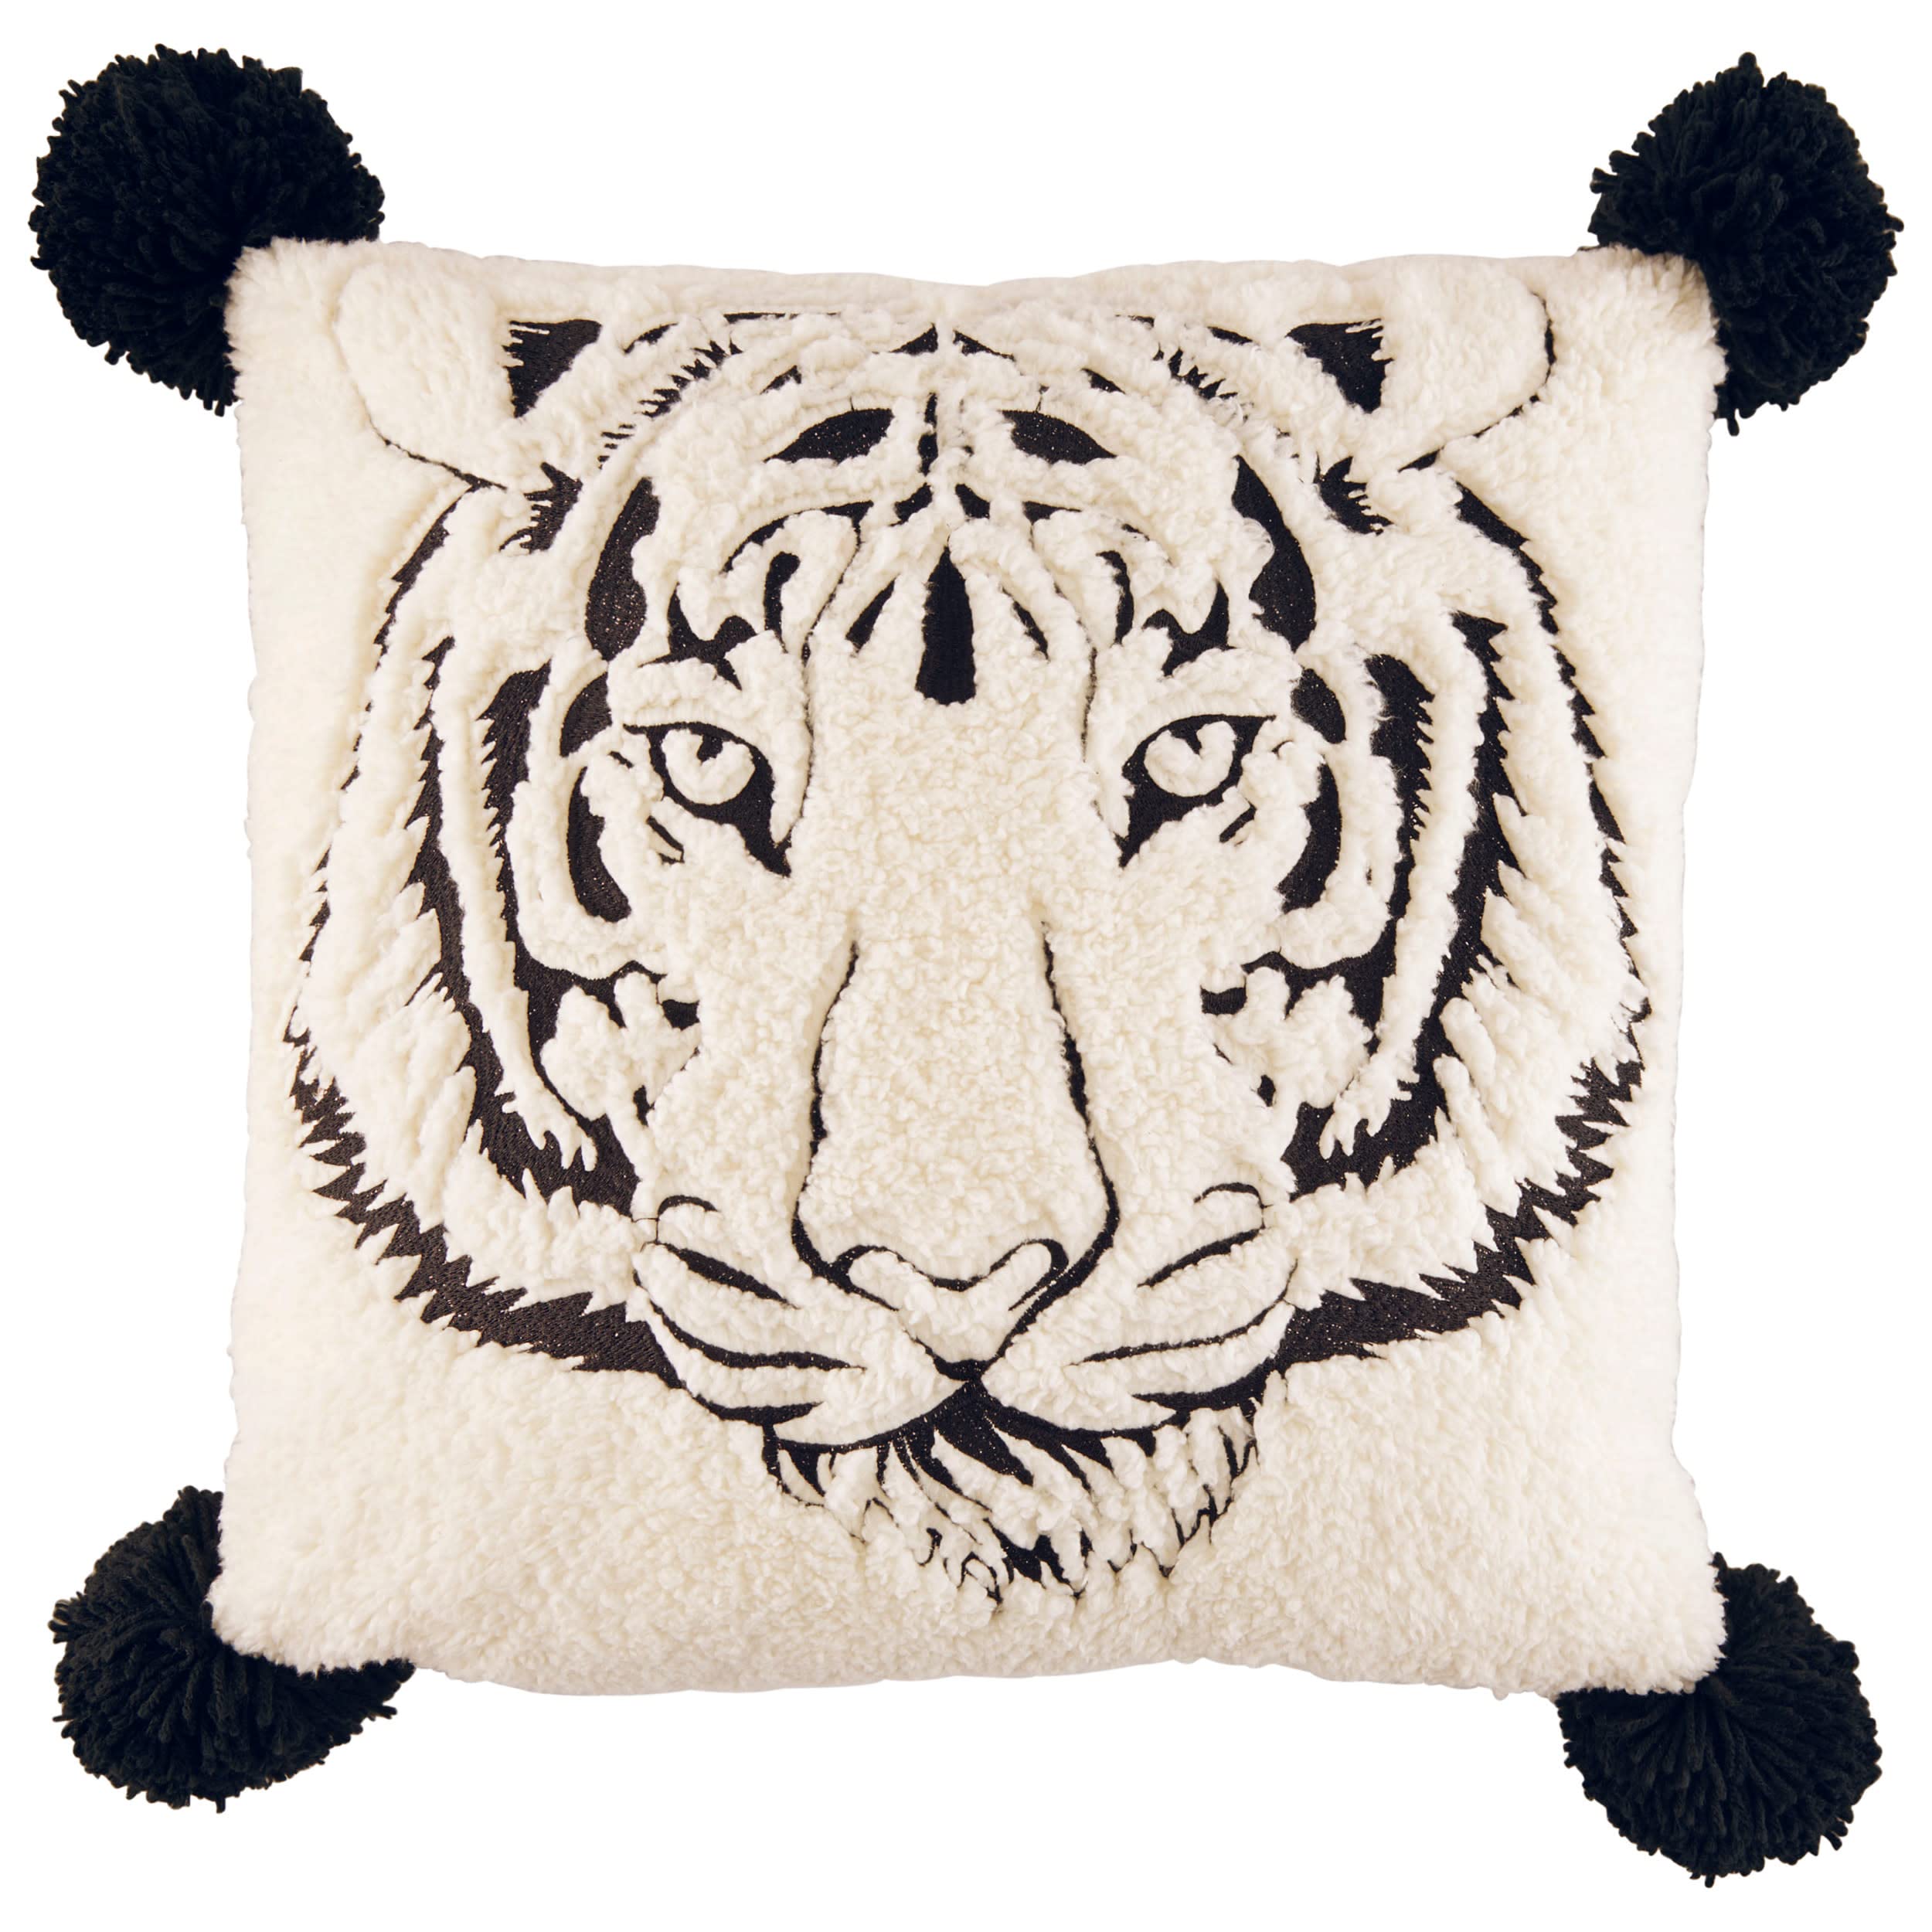 Betsey Johnson Betseys Tiger Throw Pillow, 20 x 20, Black